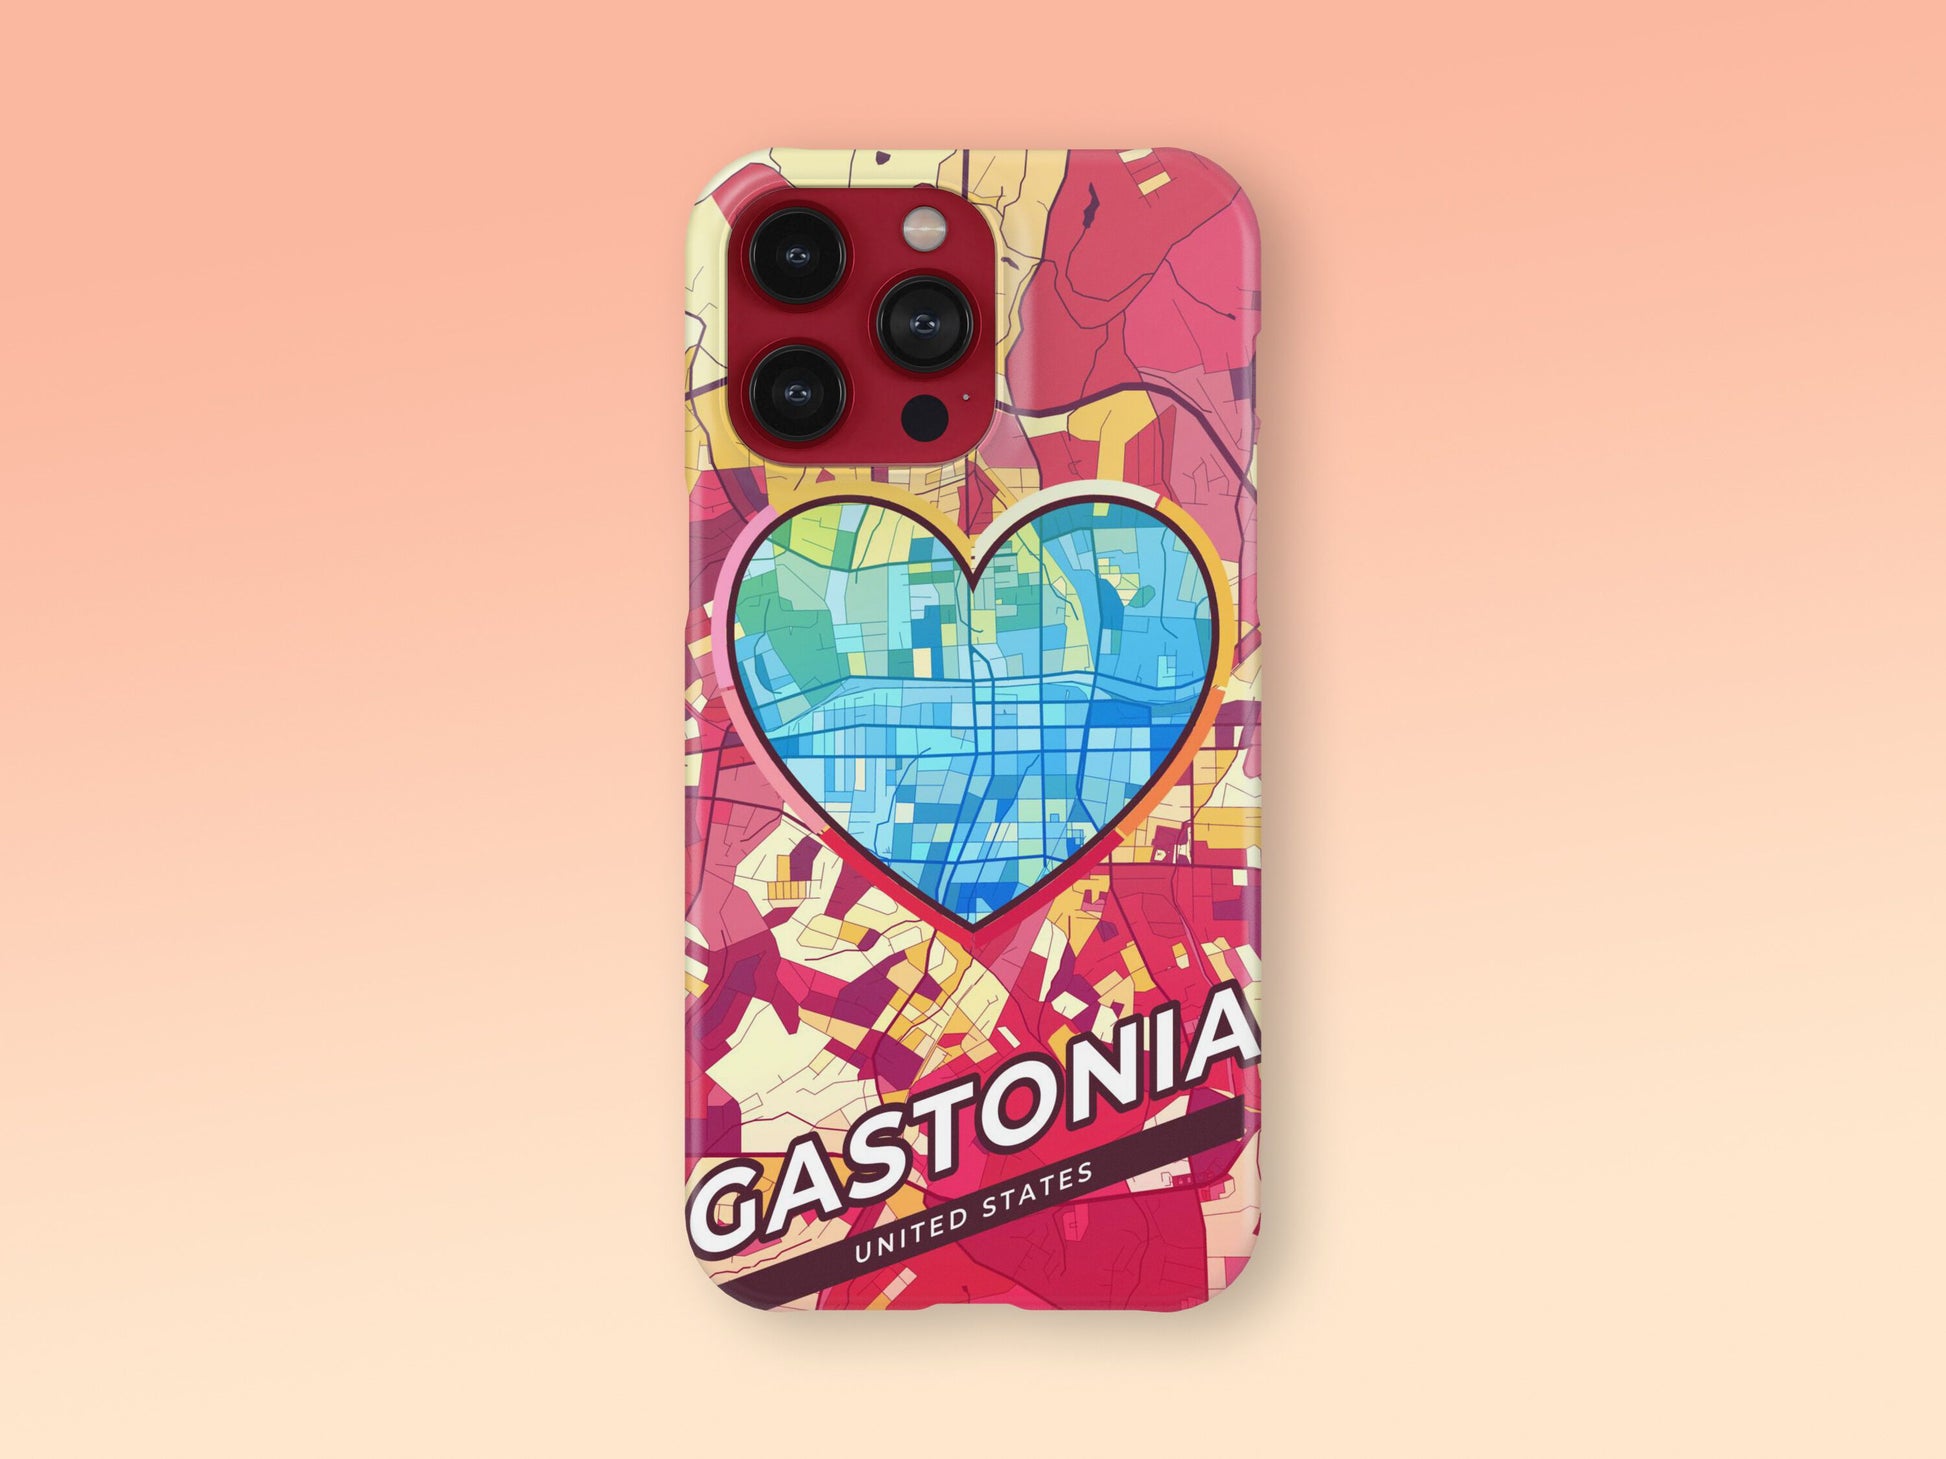 Gastonia North Carolina slim phone case with colorful icon. Birthday, wedding or housewarming gift. Couple match cases. 2